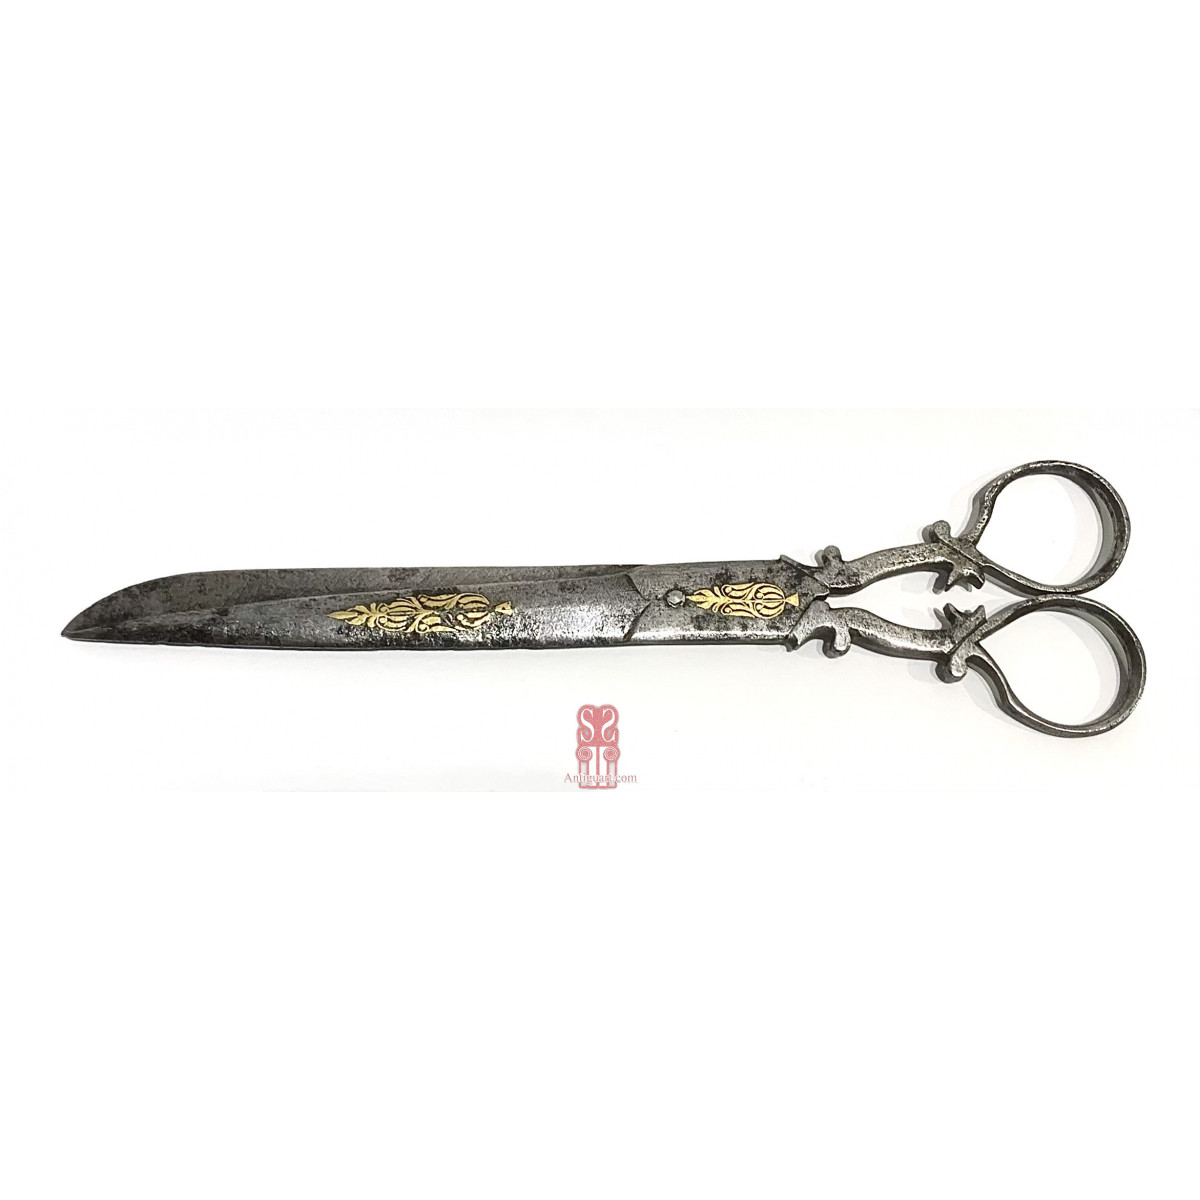 Ottoman scissors early 19th